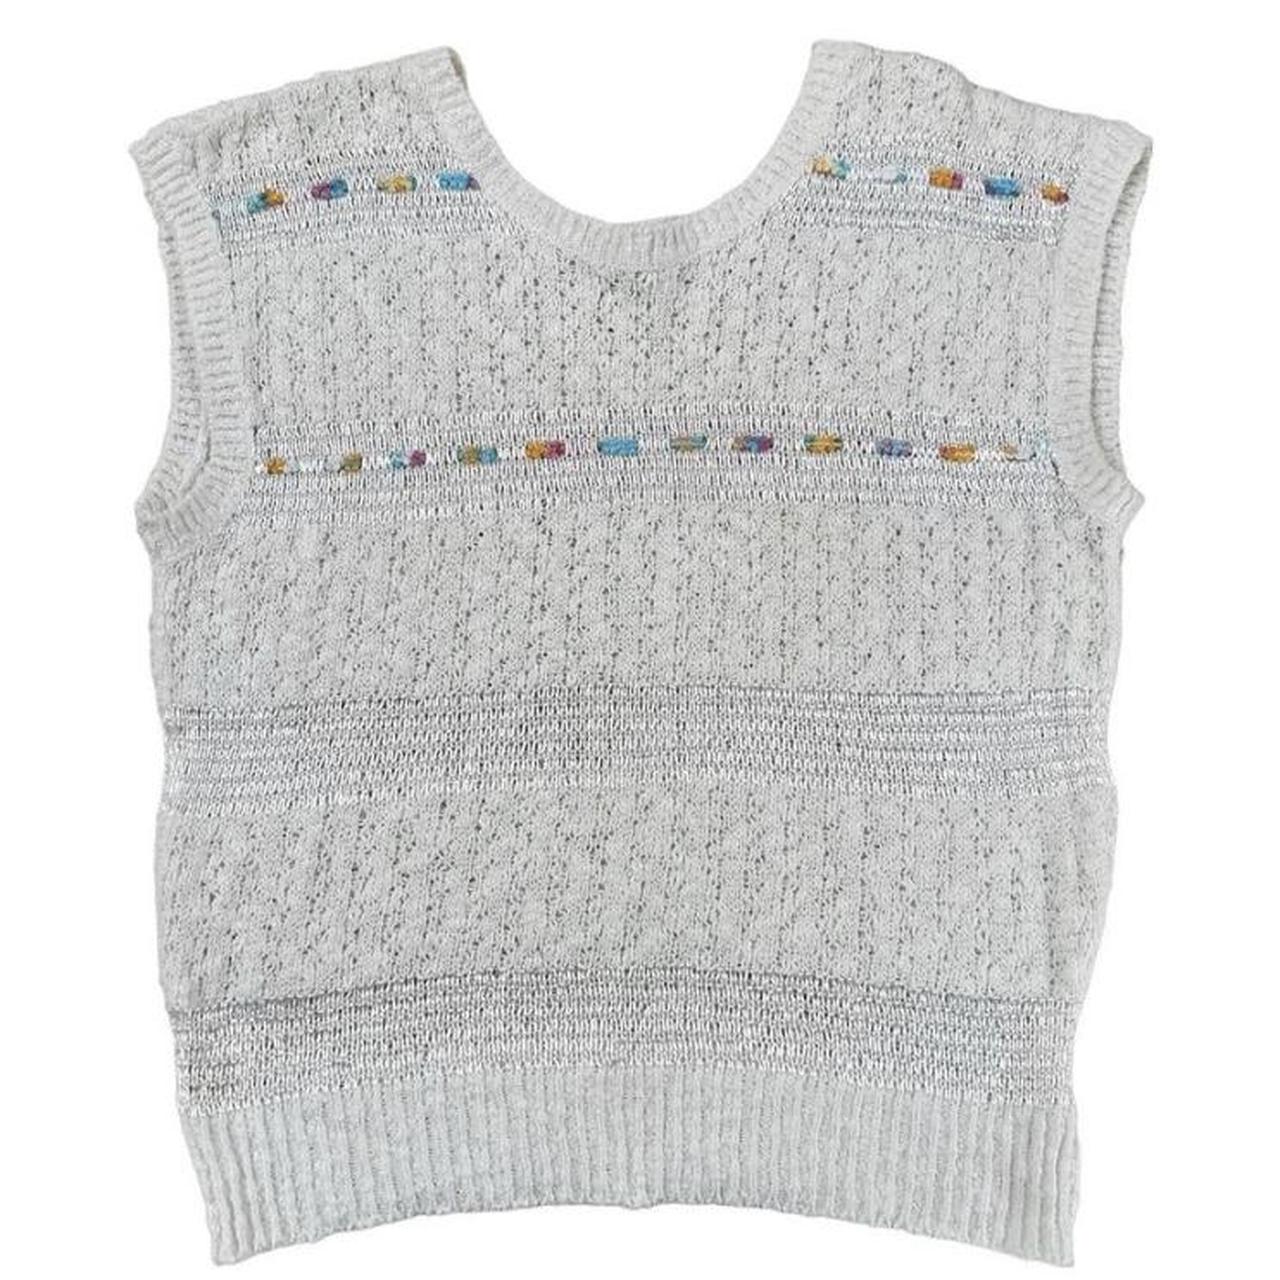 Grey sweater vest with rainbow details!! Super cute,... - Depop